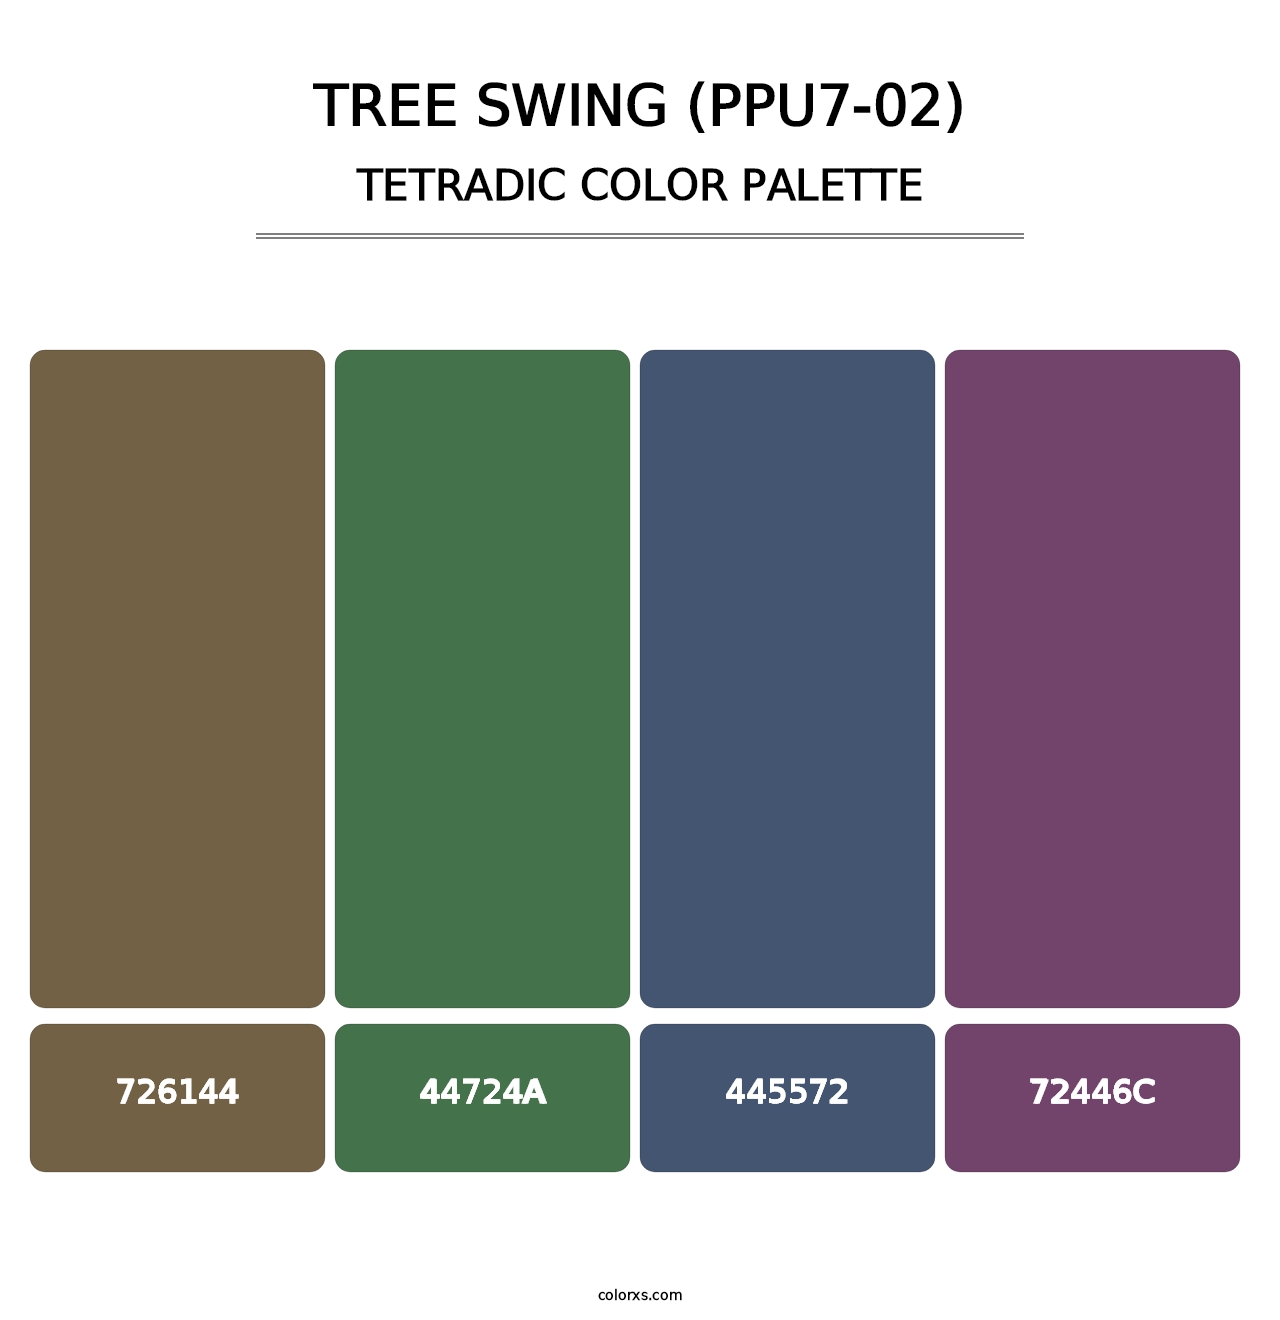 Tree Swing (PPU7-02) - Tetradic Color Palette